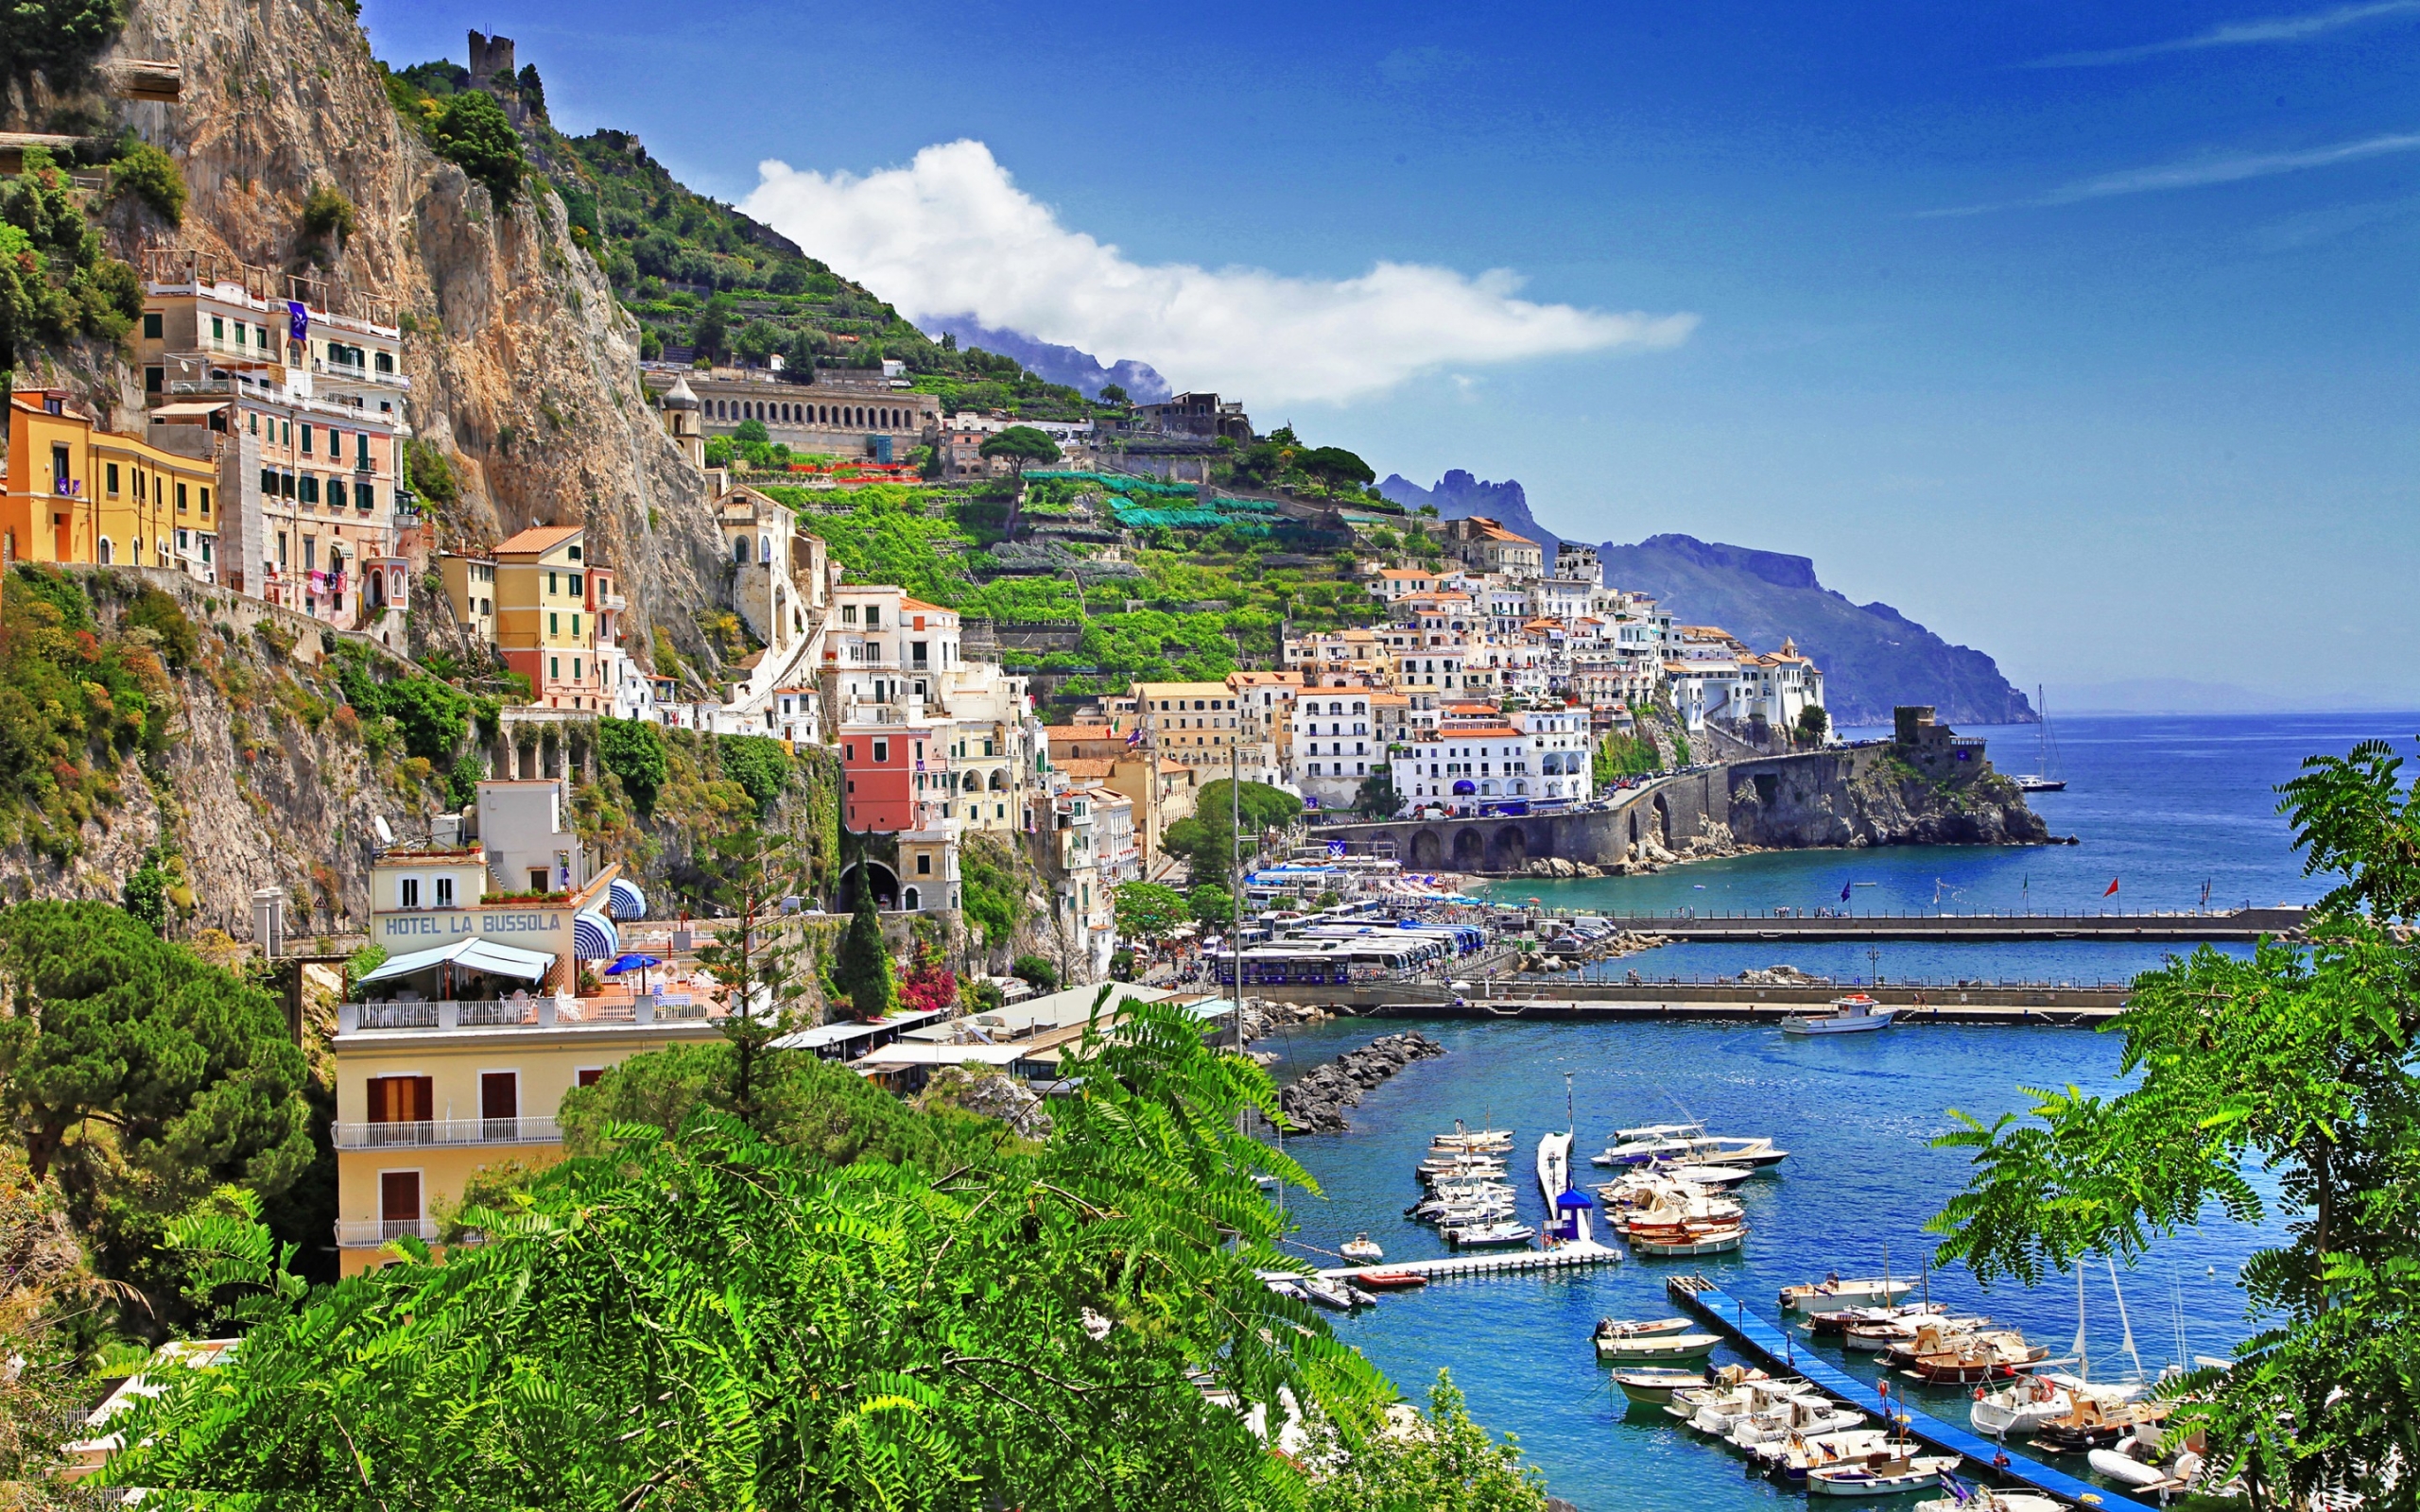 Positano Salerno for 2560 x 1600 widescreen resolution